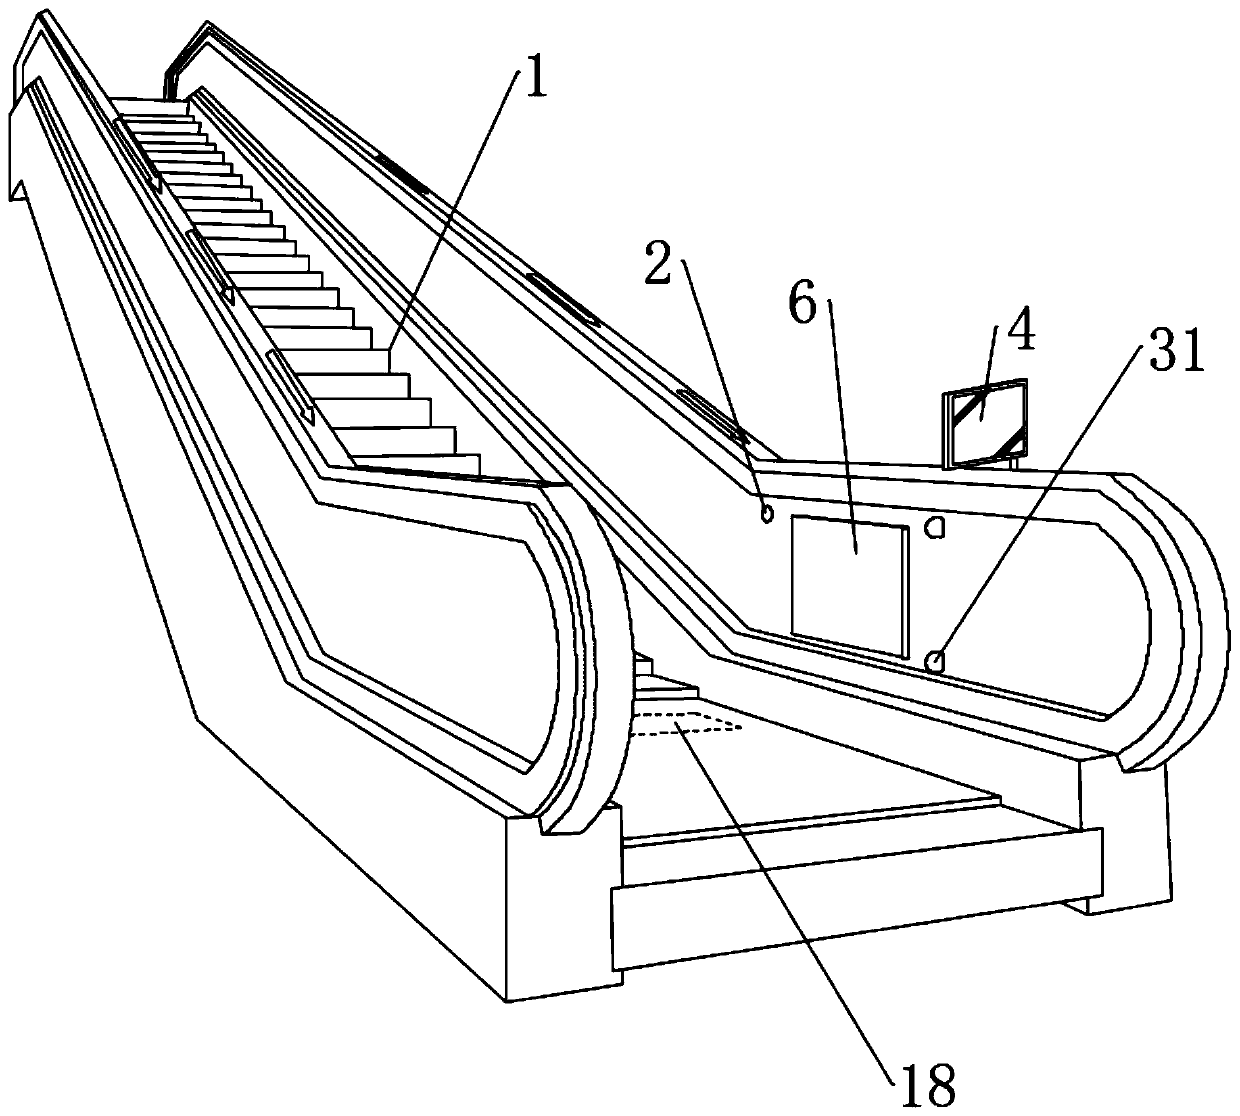 Internet of Things-based anti-retrograding safety escalator used for shopping malls